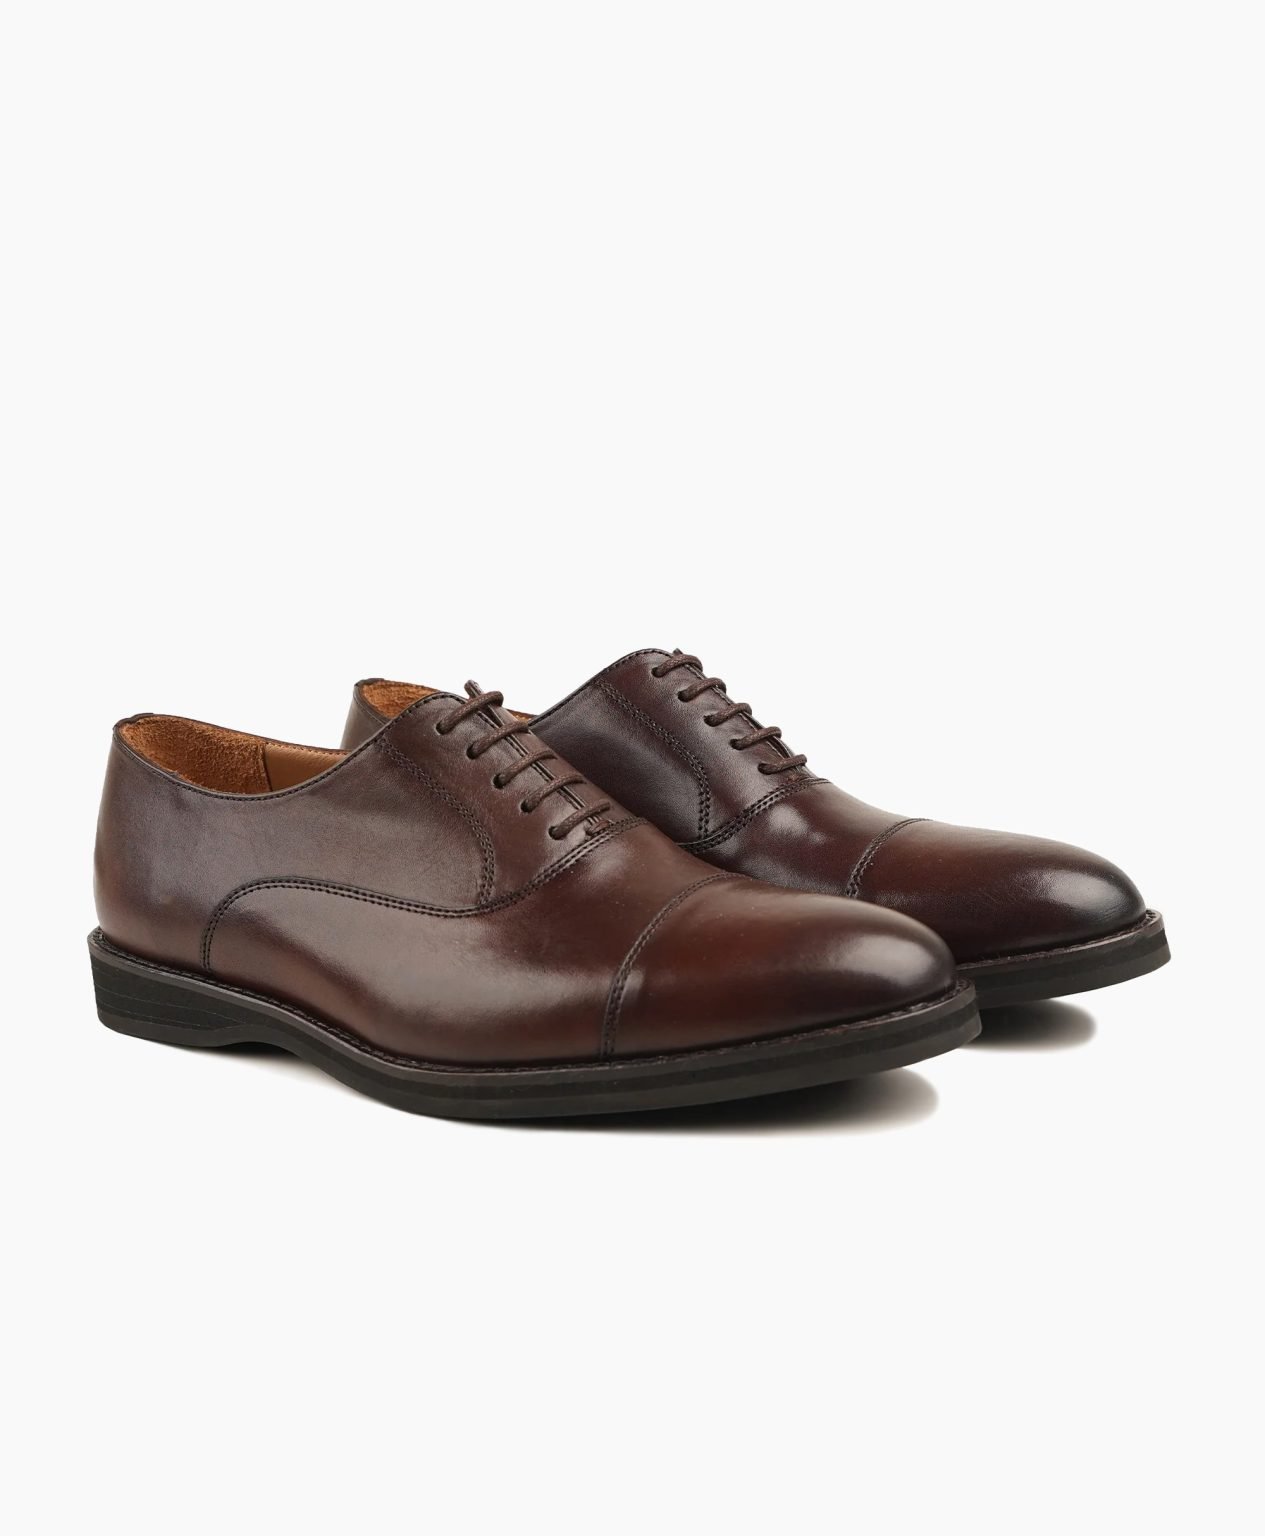 launceston-oxford-dark-brown-leather-shoes-image200